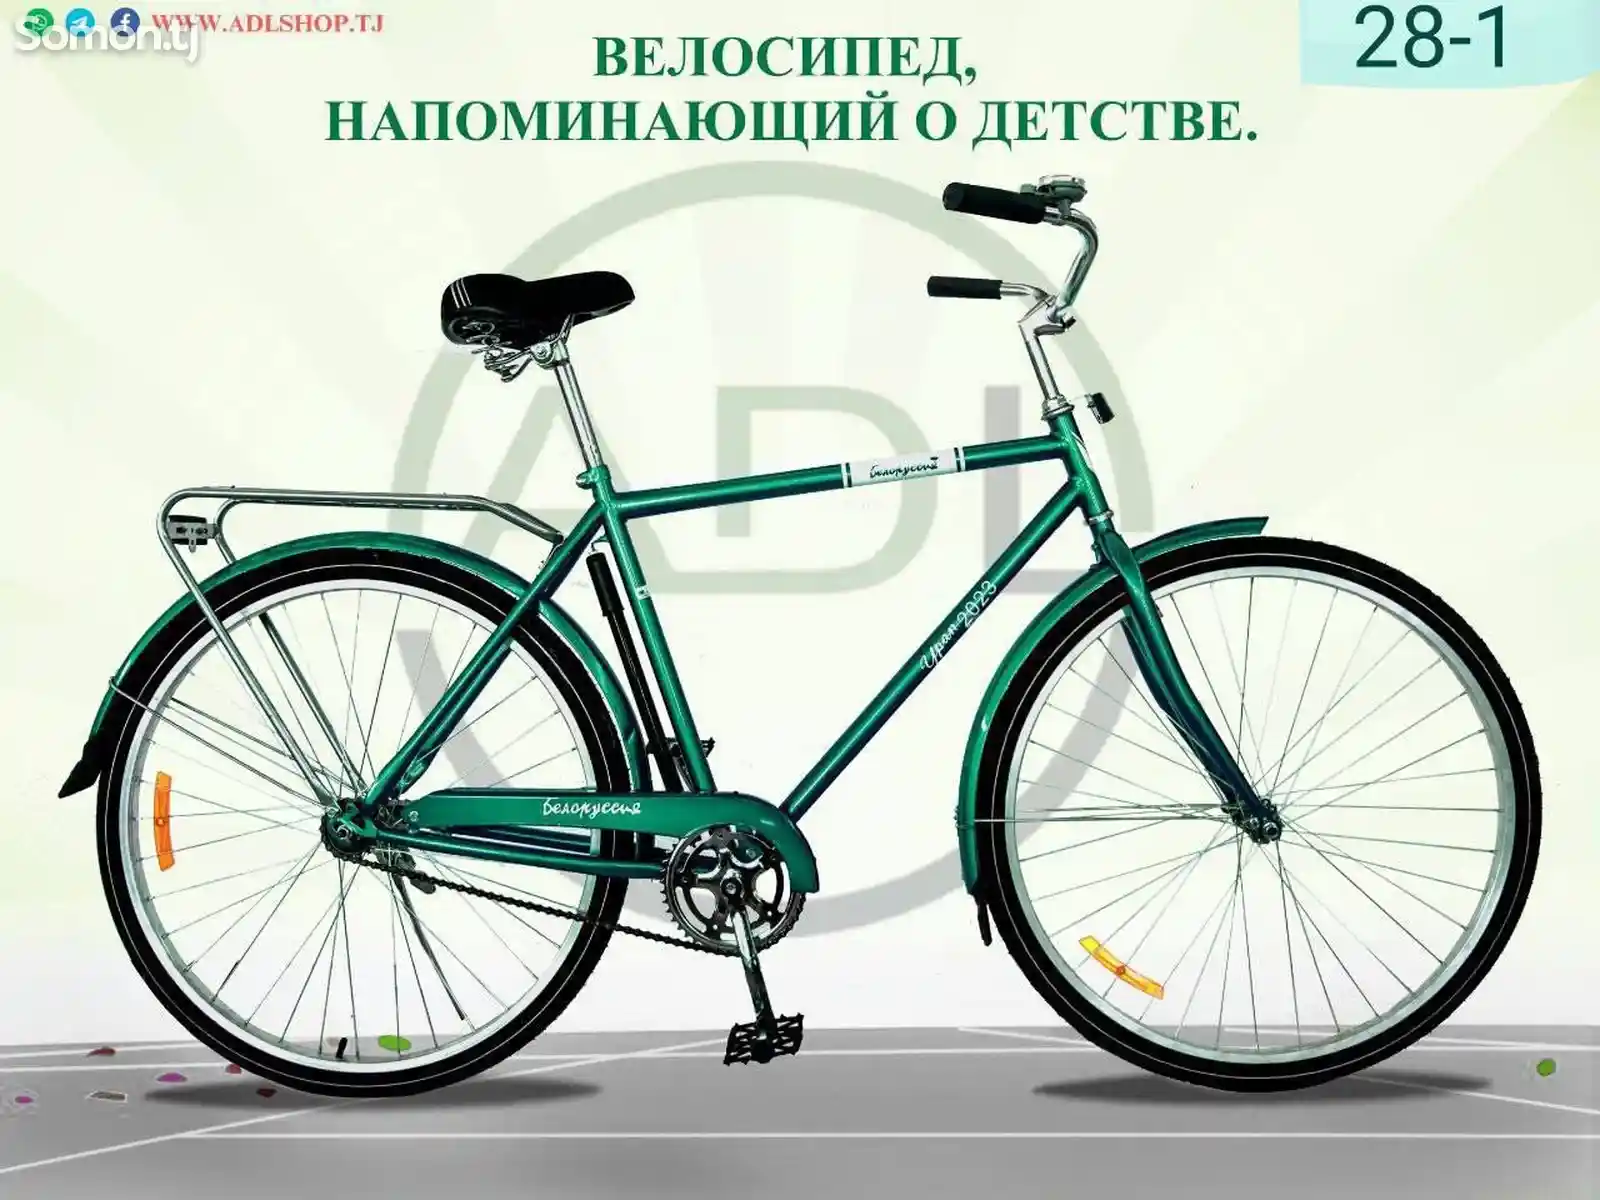 Велосипед R28-2